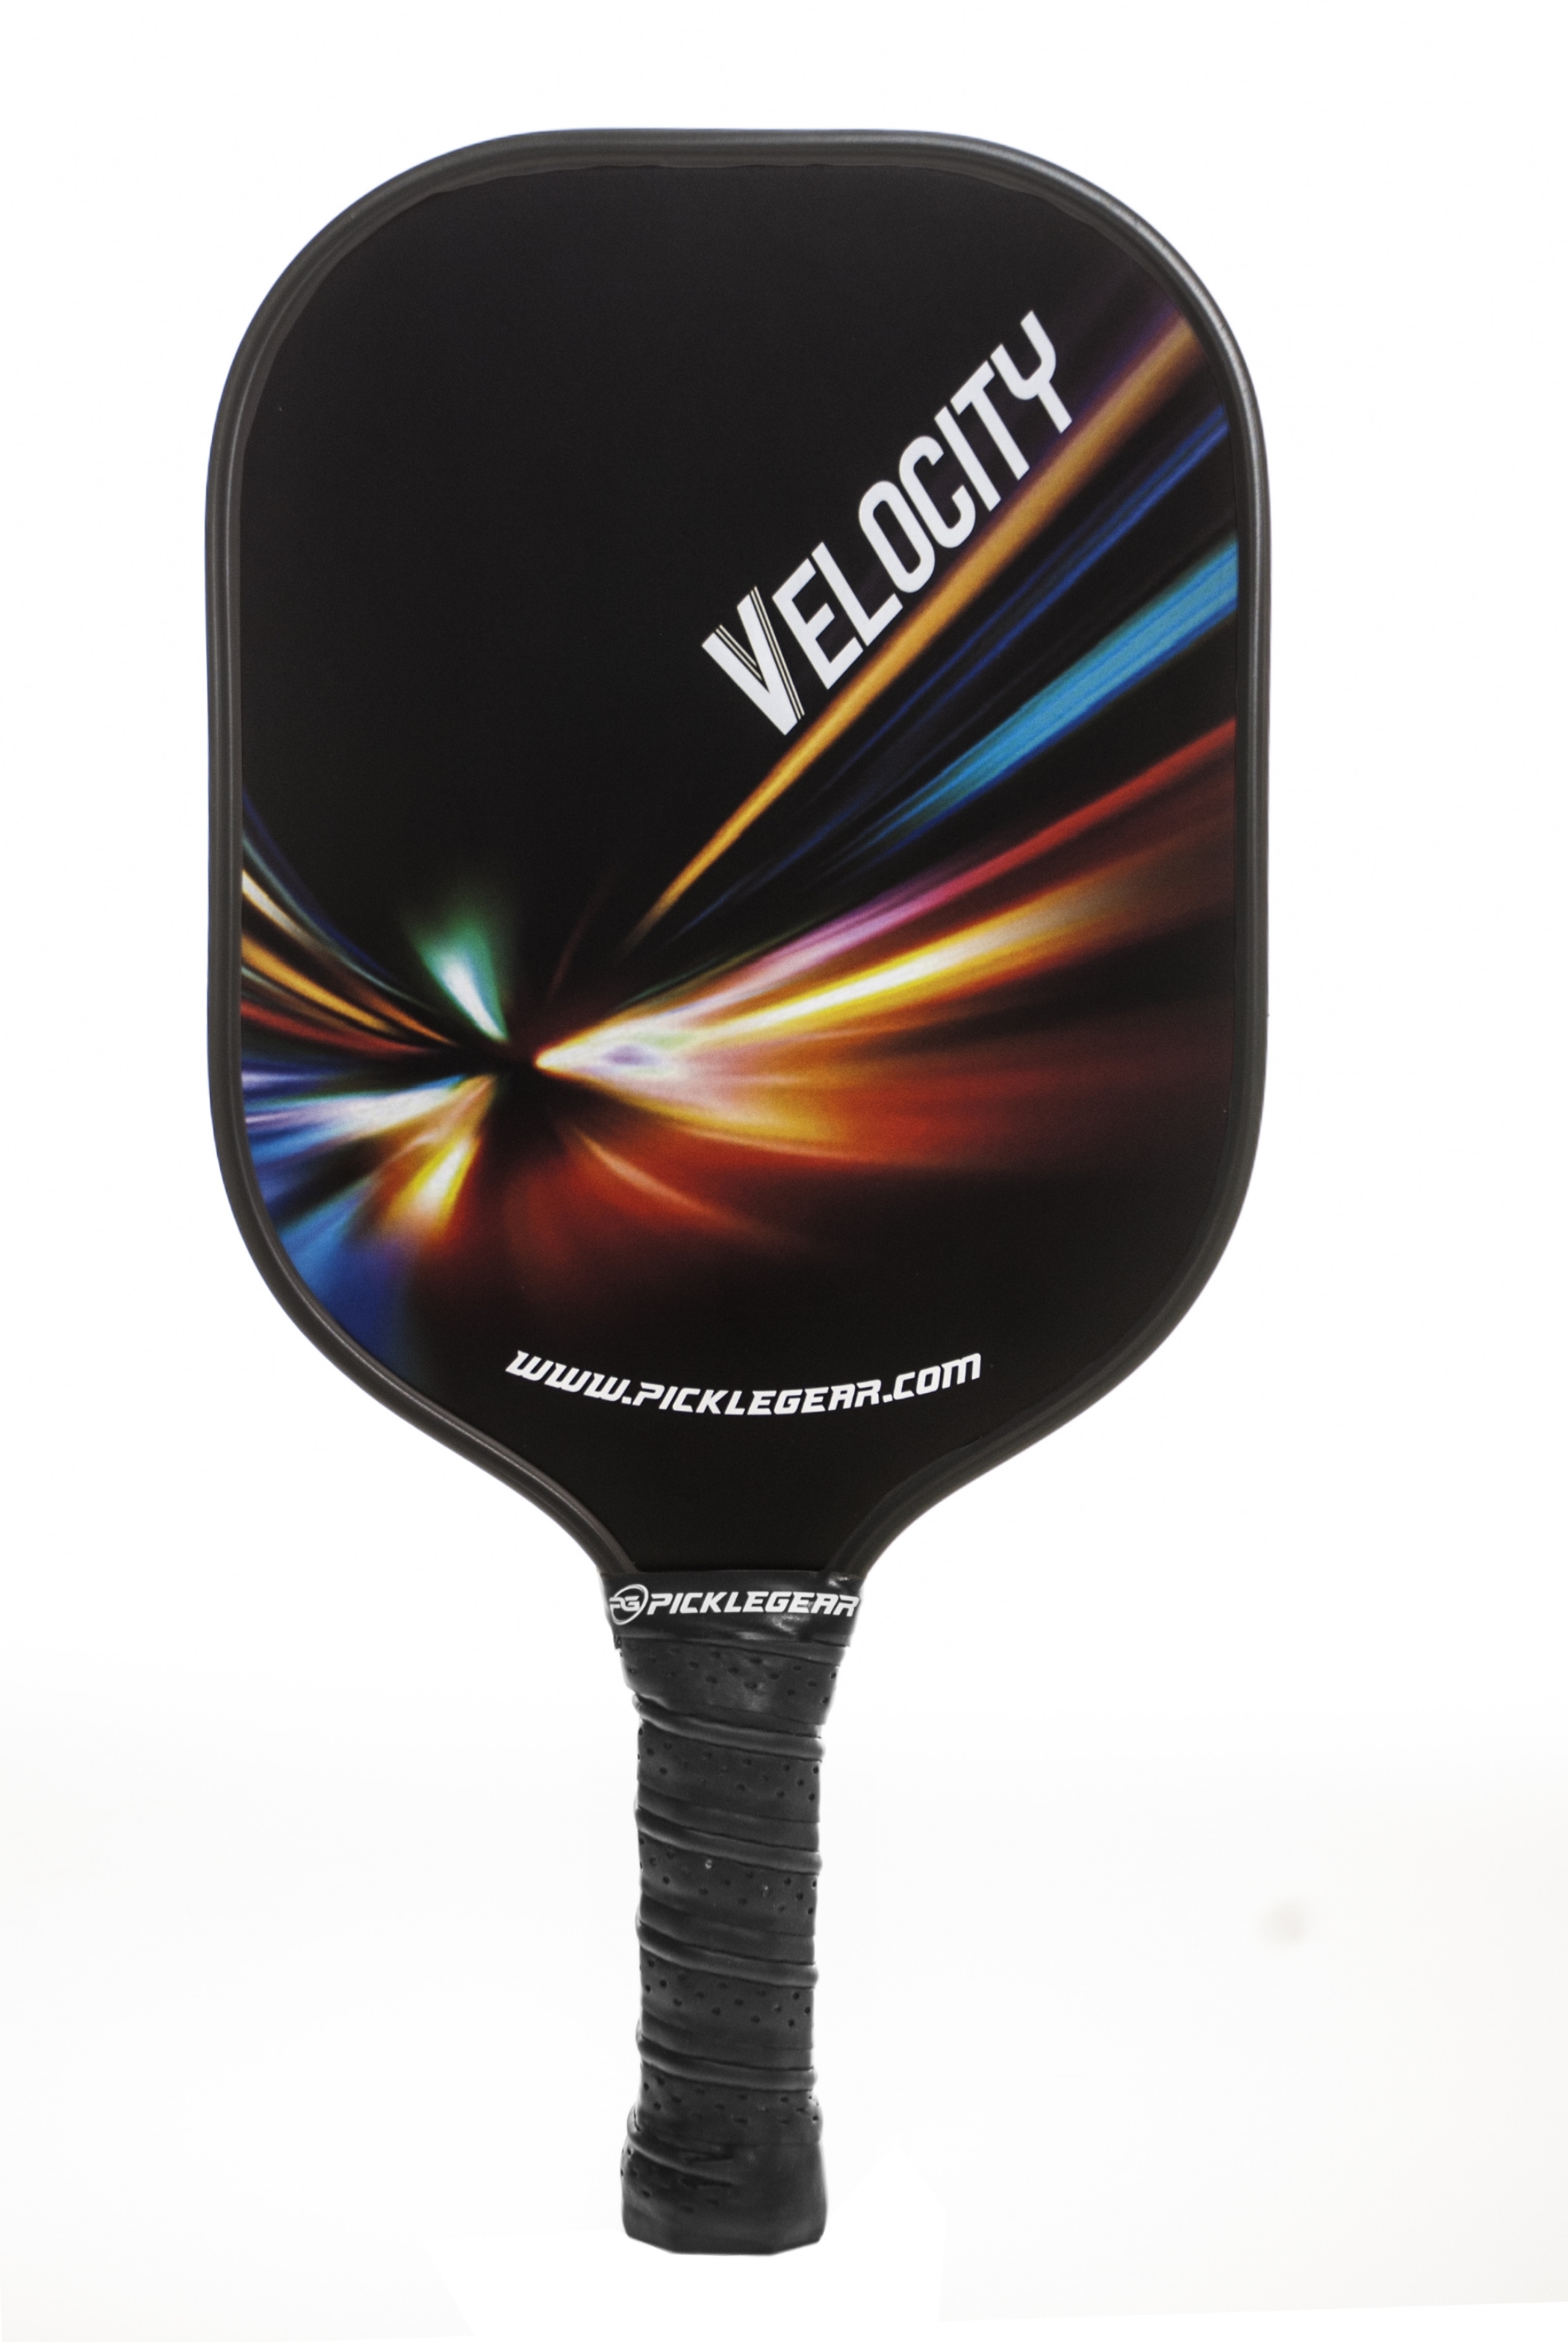 Picklegear Velocity Light Weight Professional Graphite Pickleball Paddle w/ Full 